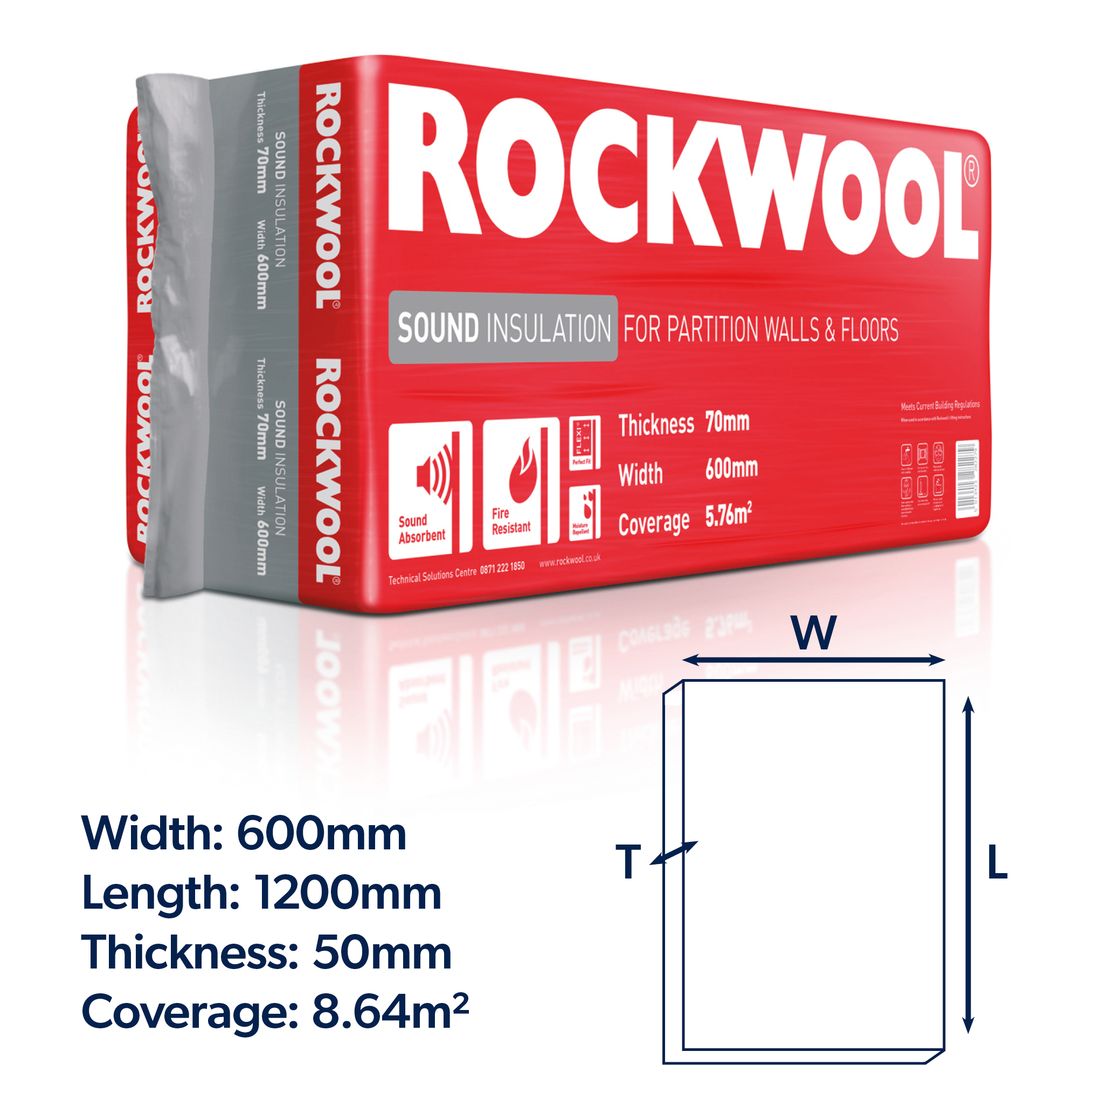 Rockwool Sound Insulation Slab 1200 X 600 X 50Mm Pk12 8.64M2